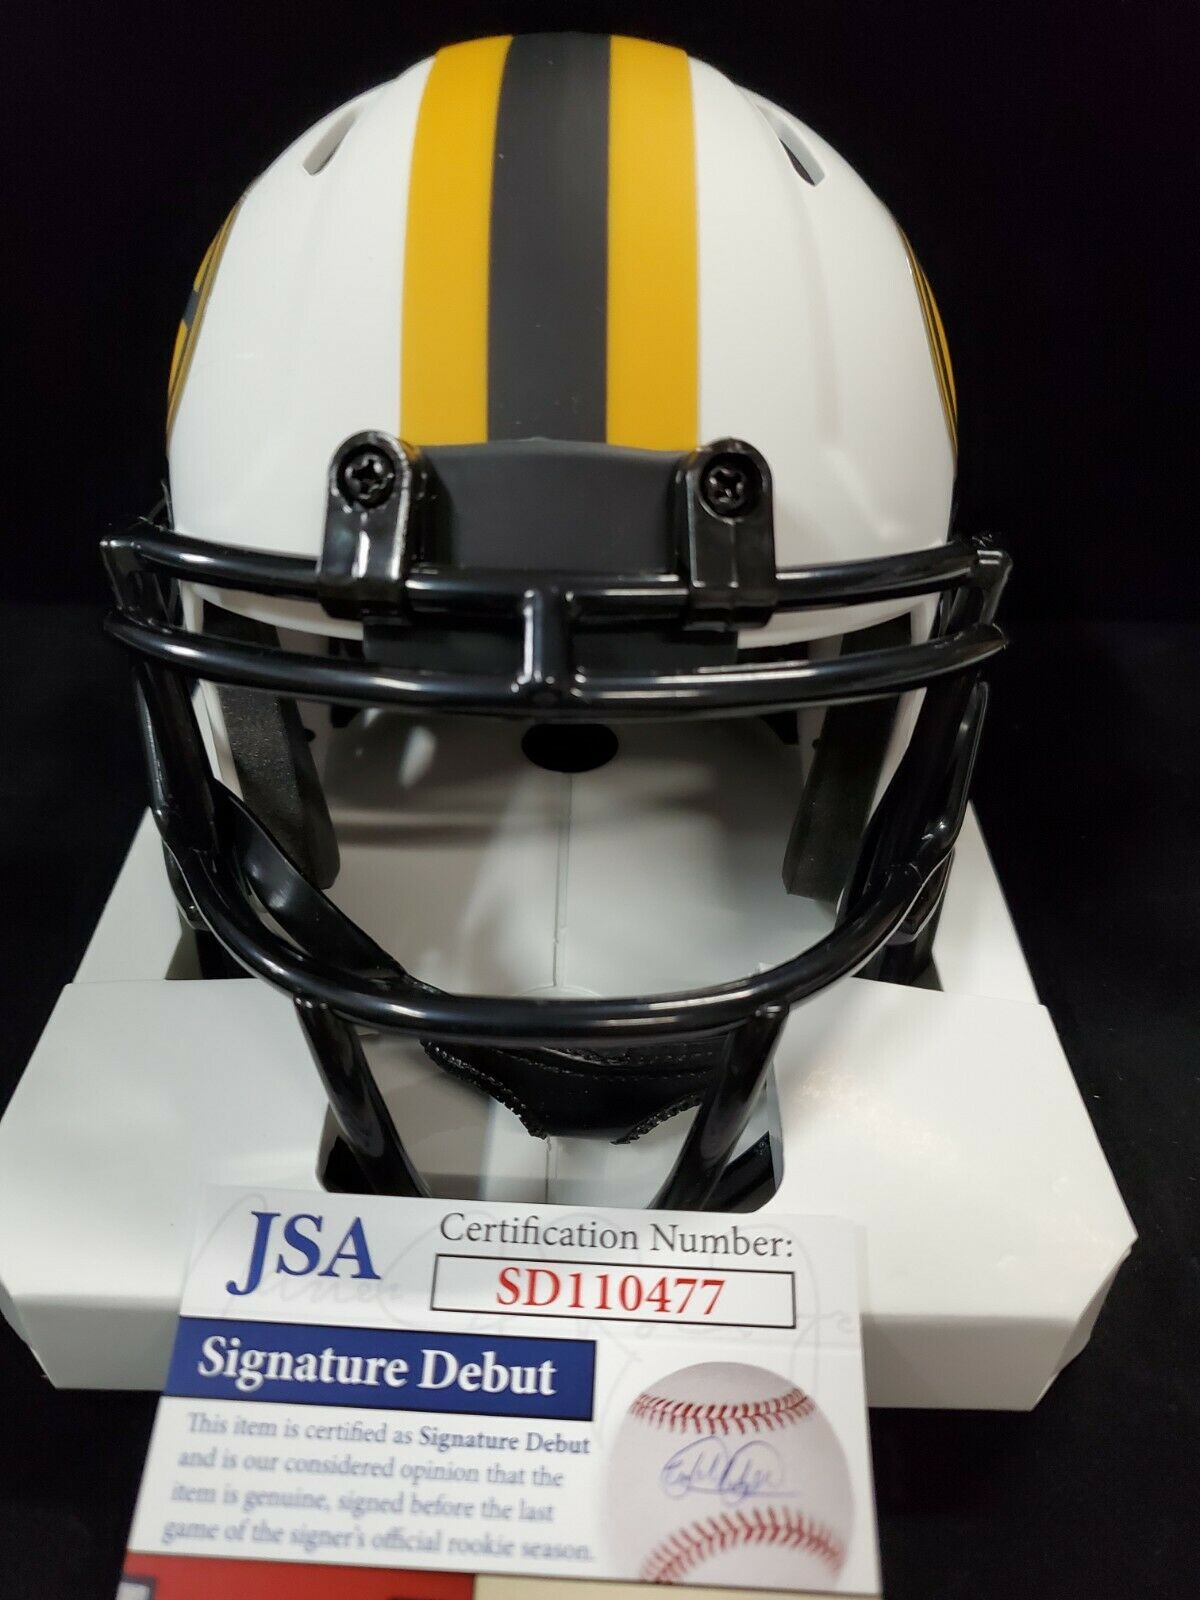 MVP Authentics Green Bay Packers Amari Rodgers Autographed Signed Lunar Mini Helmet Jsa Coa 117 sports jersey framing , jersey framing